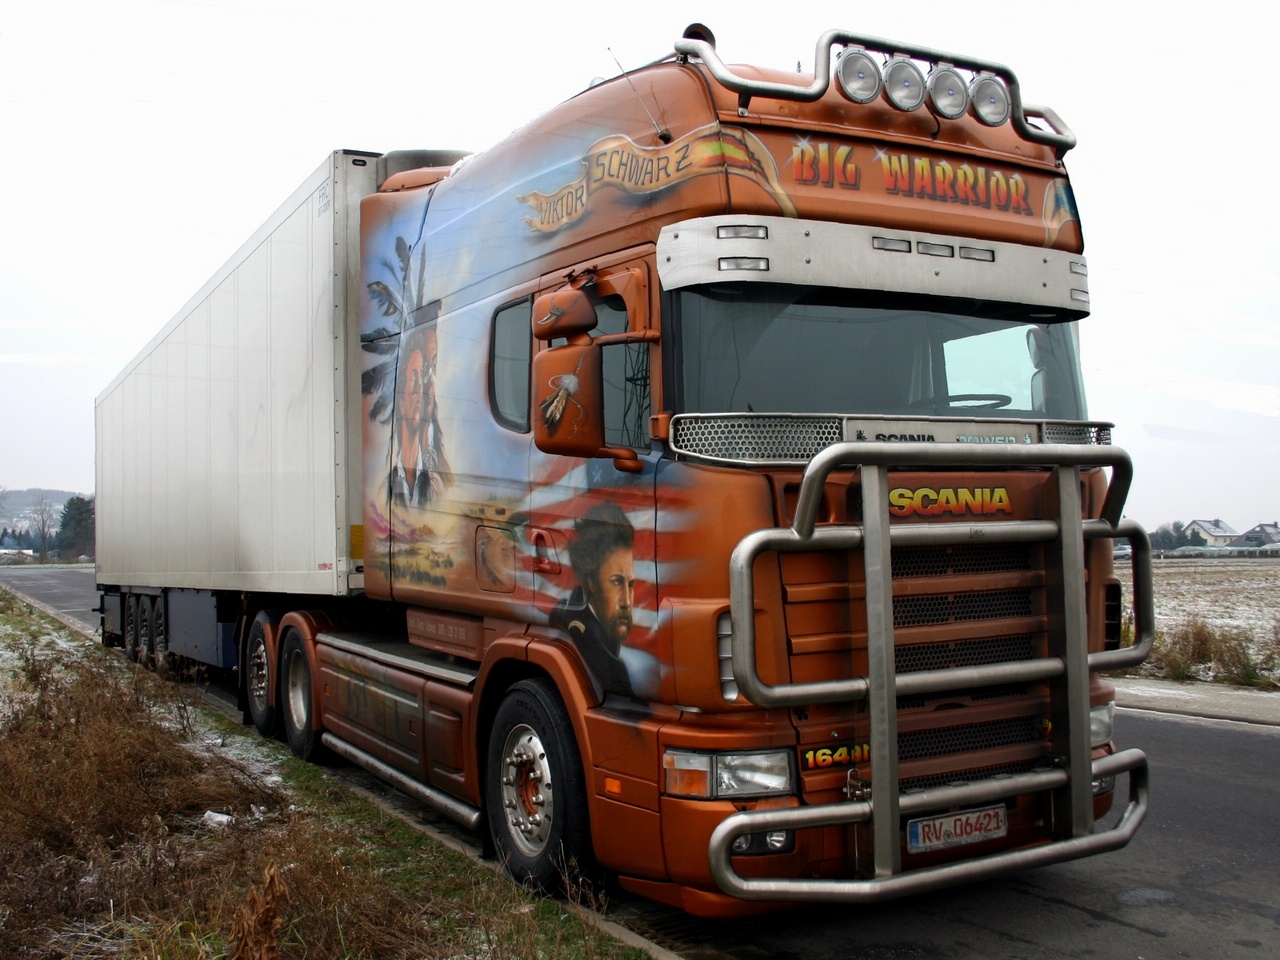 Scania Truck Grote Warrior Wallpaper